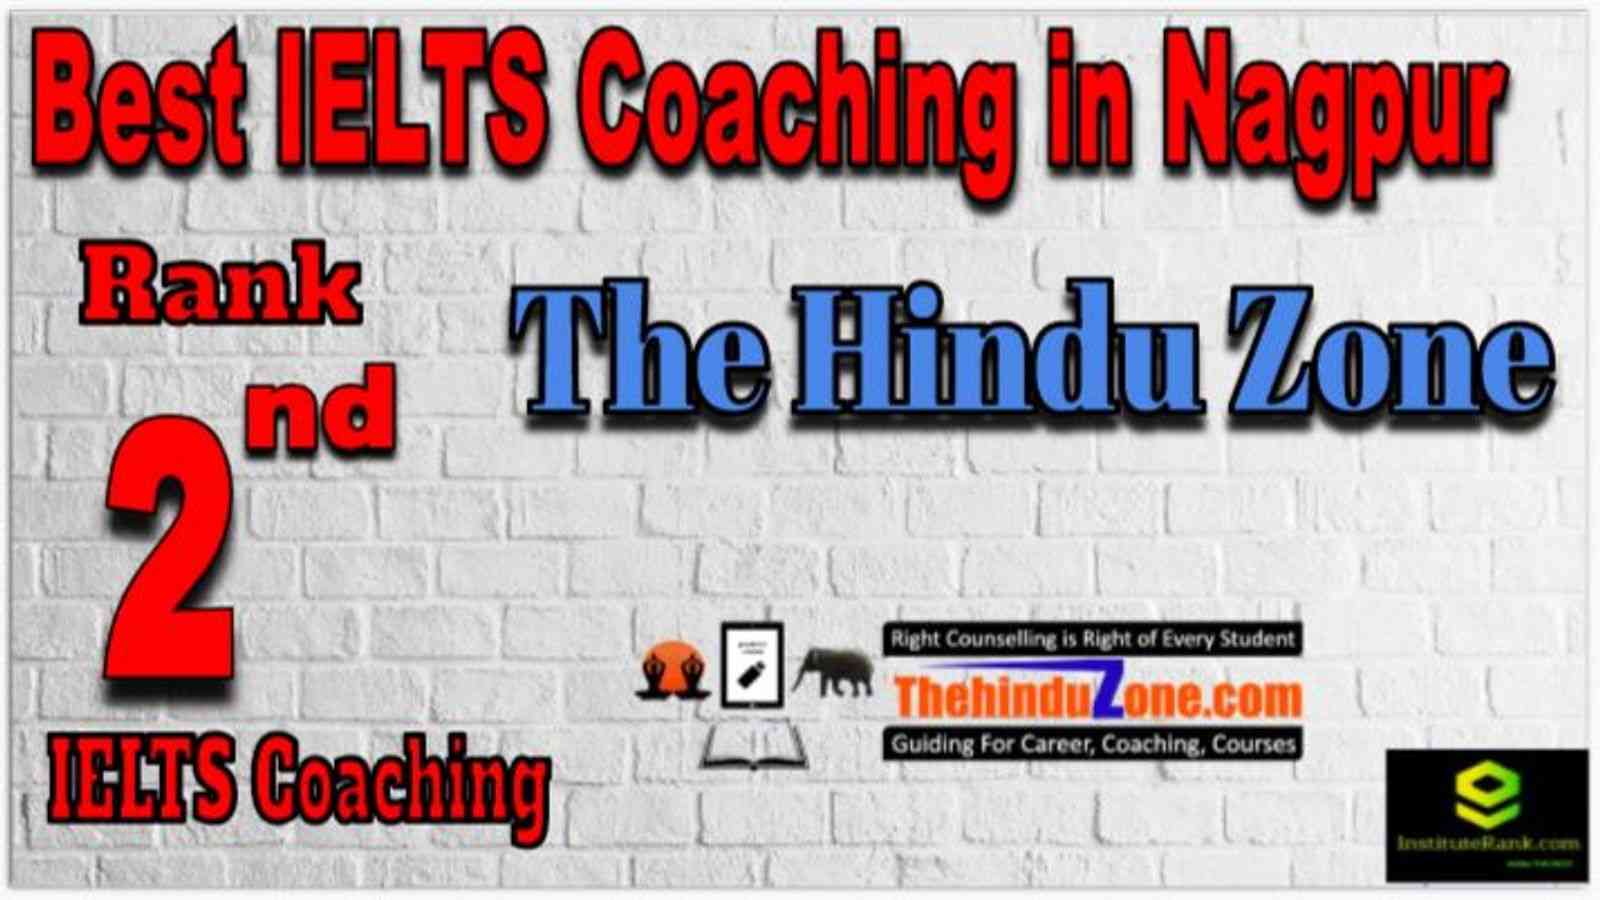 Rank 2 Best IELTS Coaching in Nagpur